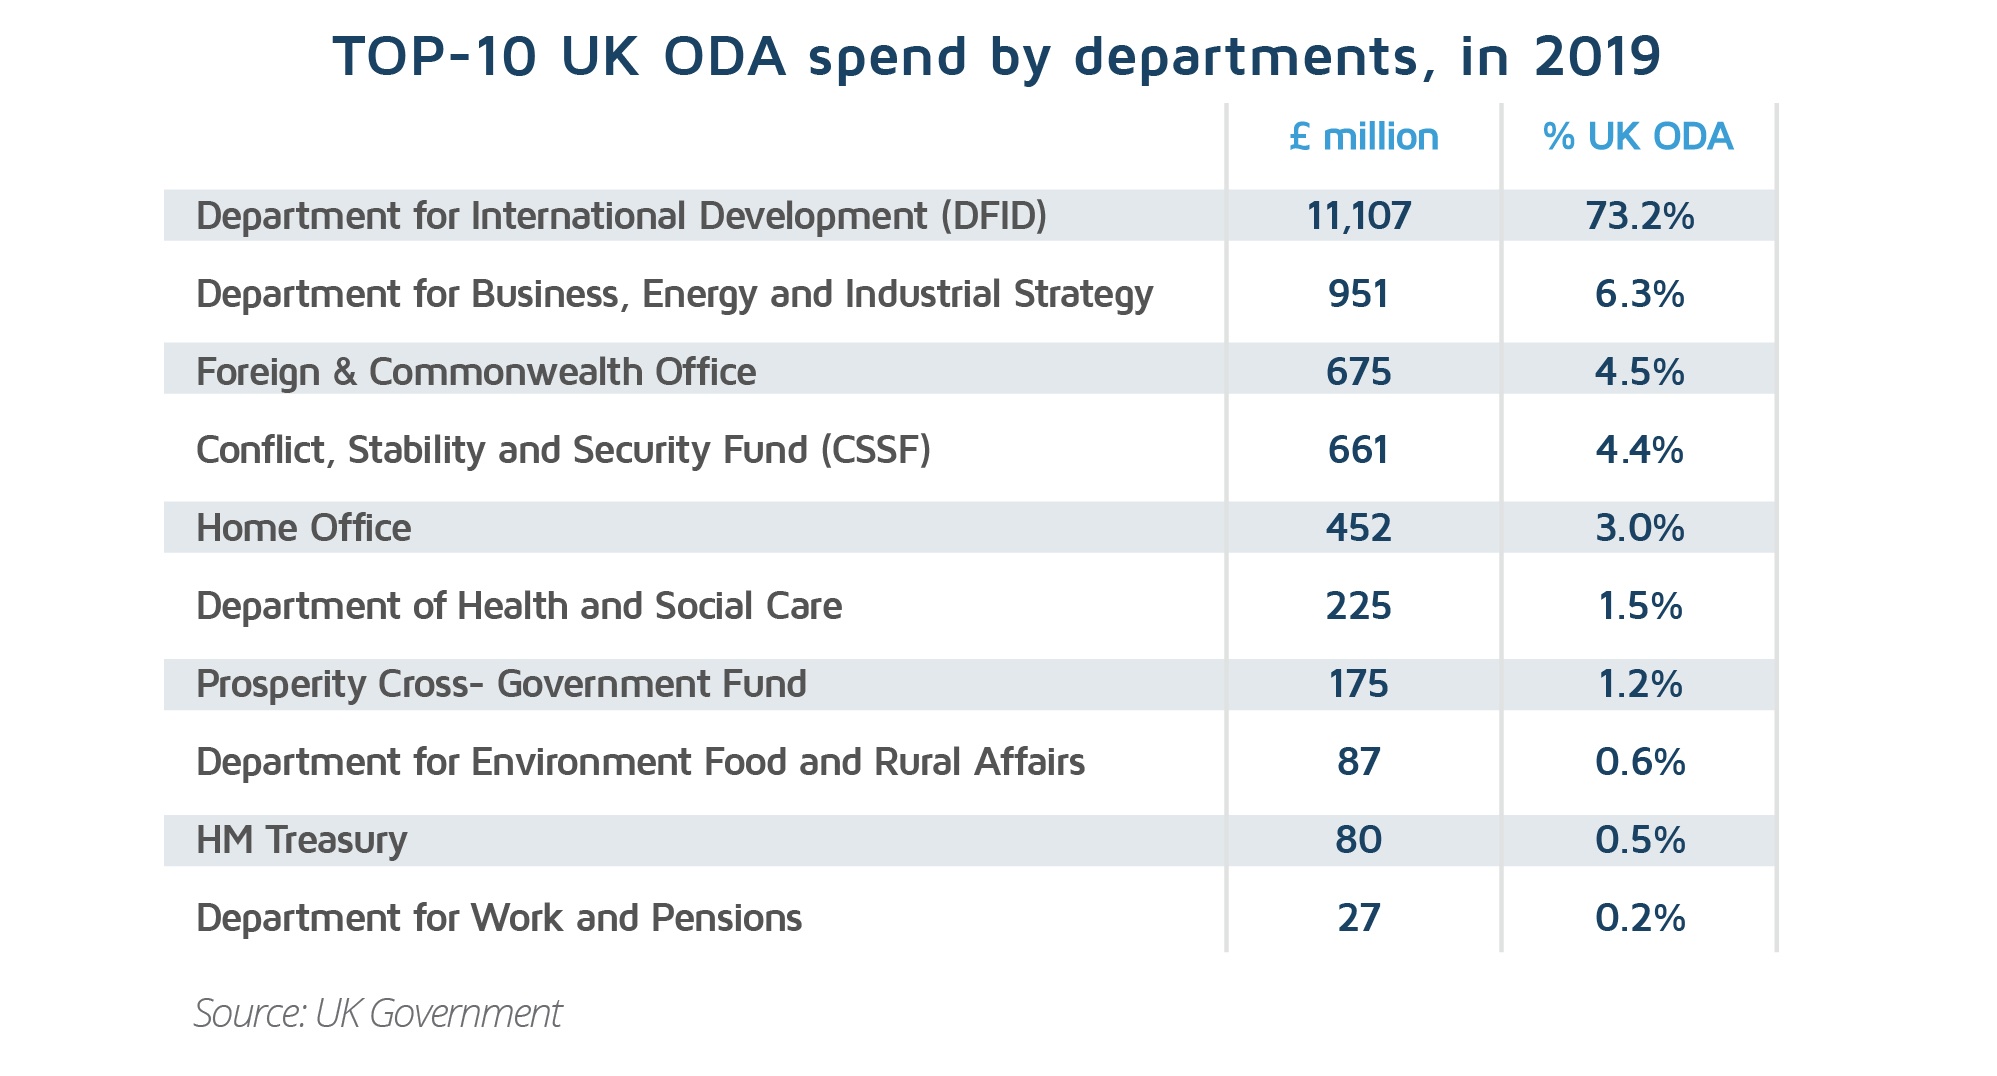 TOP-10 UK ODA spend my departments in 2019